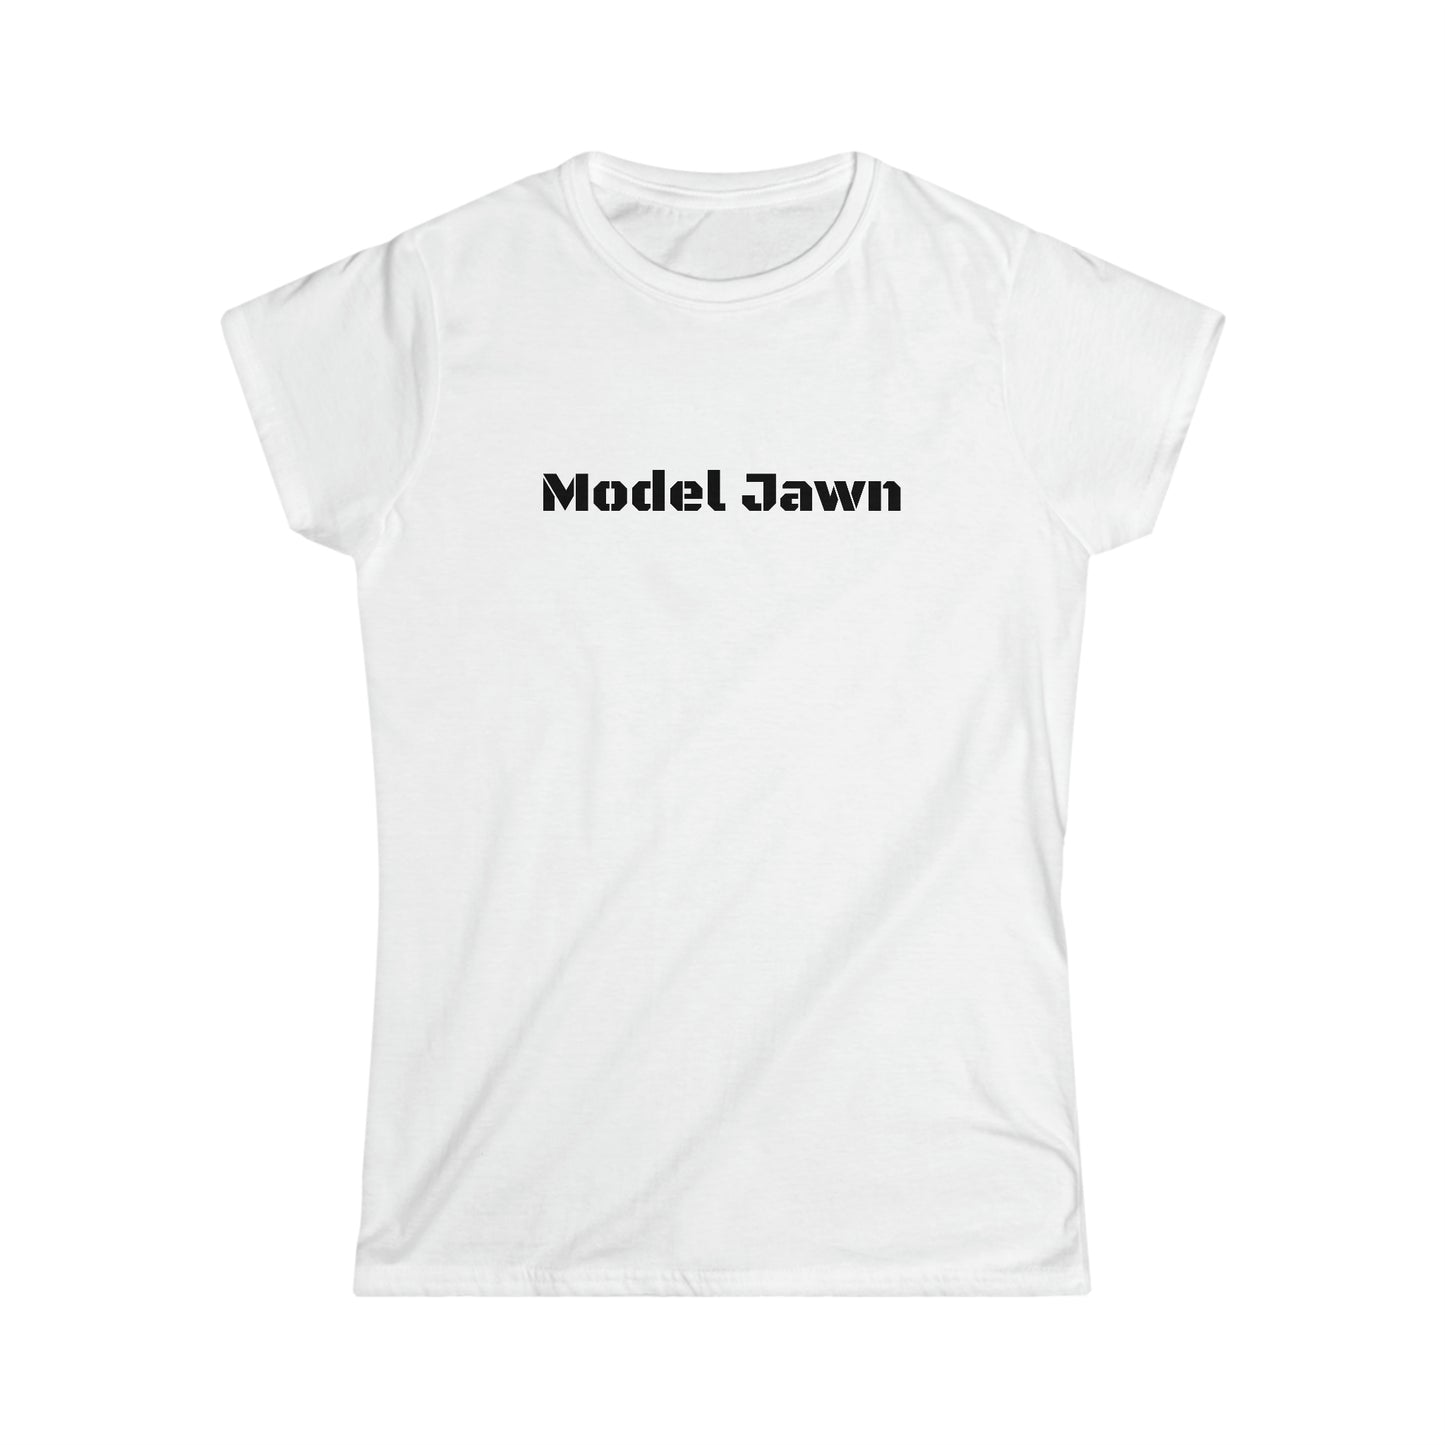 Model Jawn Tee